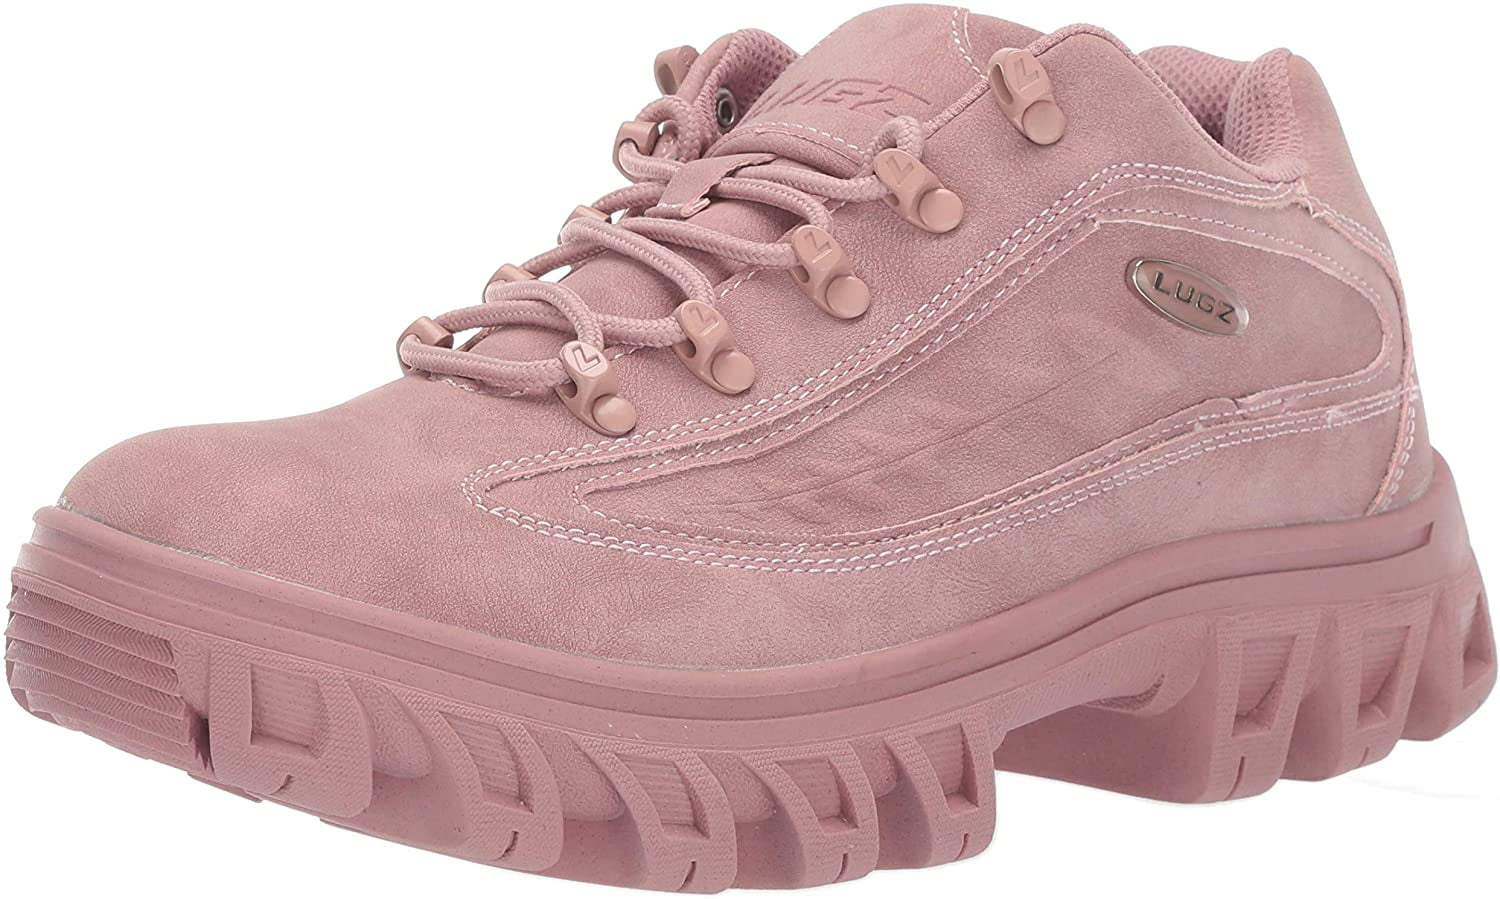 blush pink sneakers